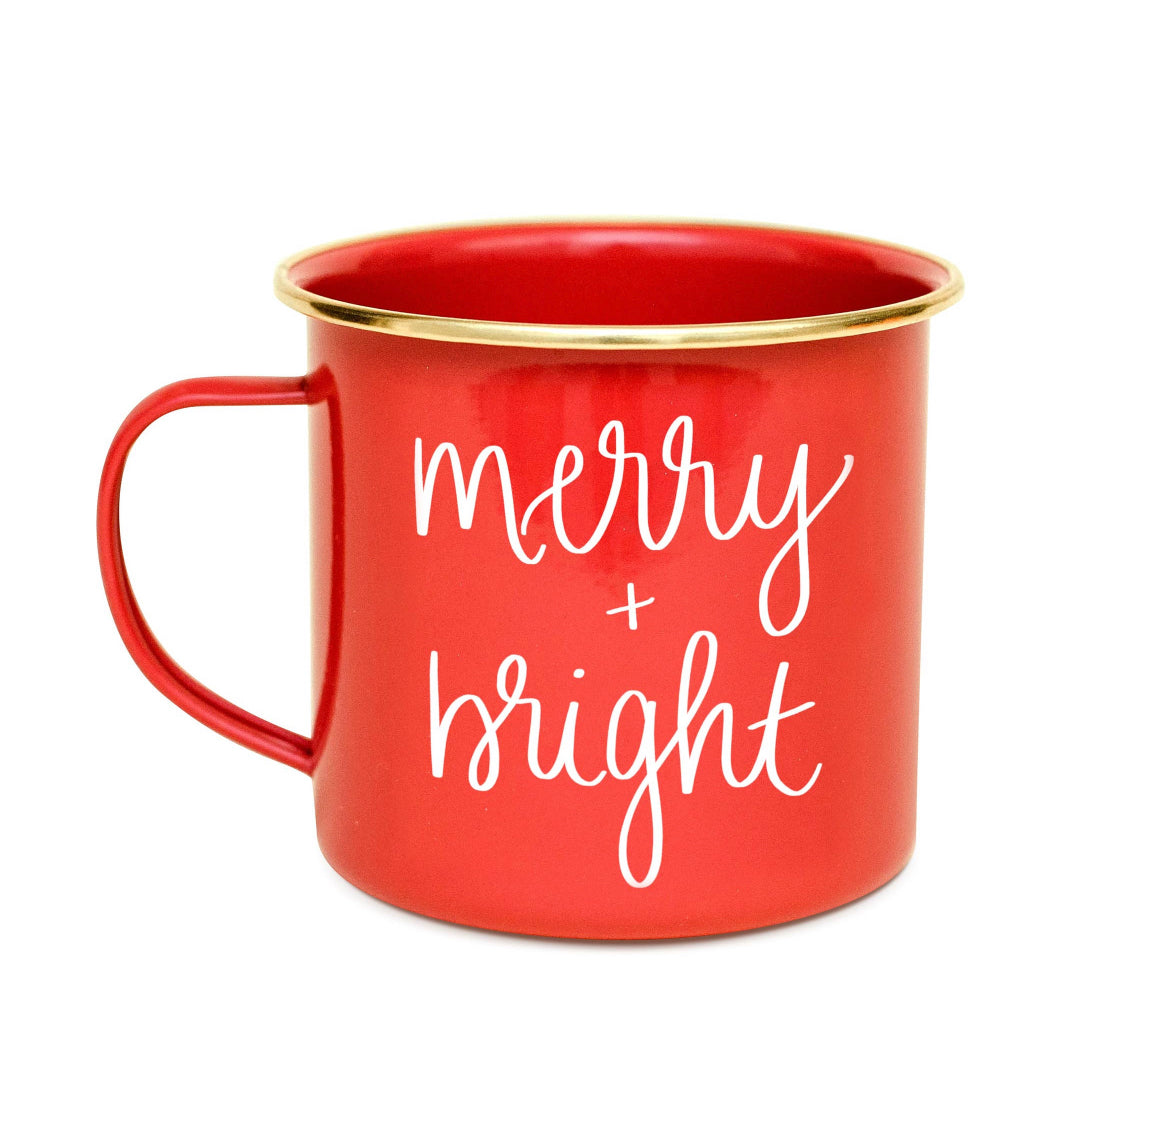 Merry and Bright - Red Campfire Coffee Mug 18 oz.